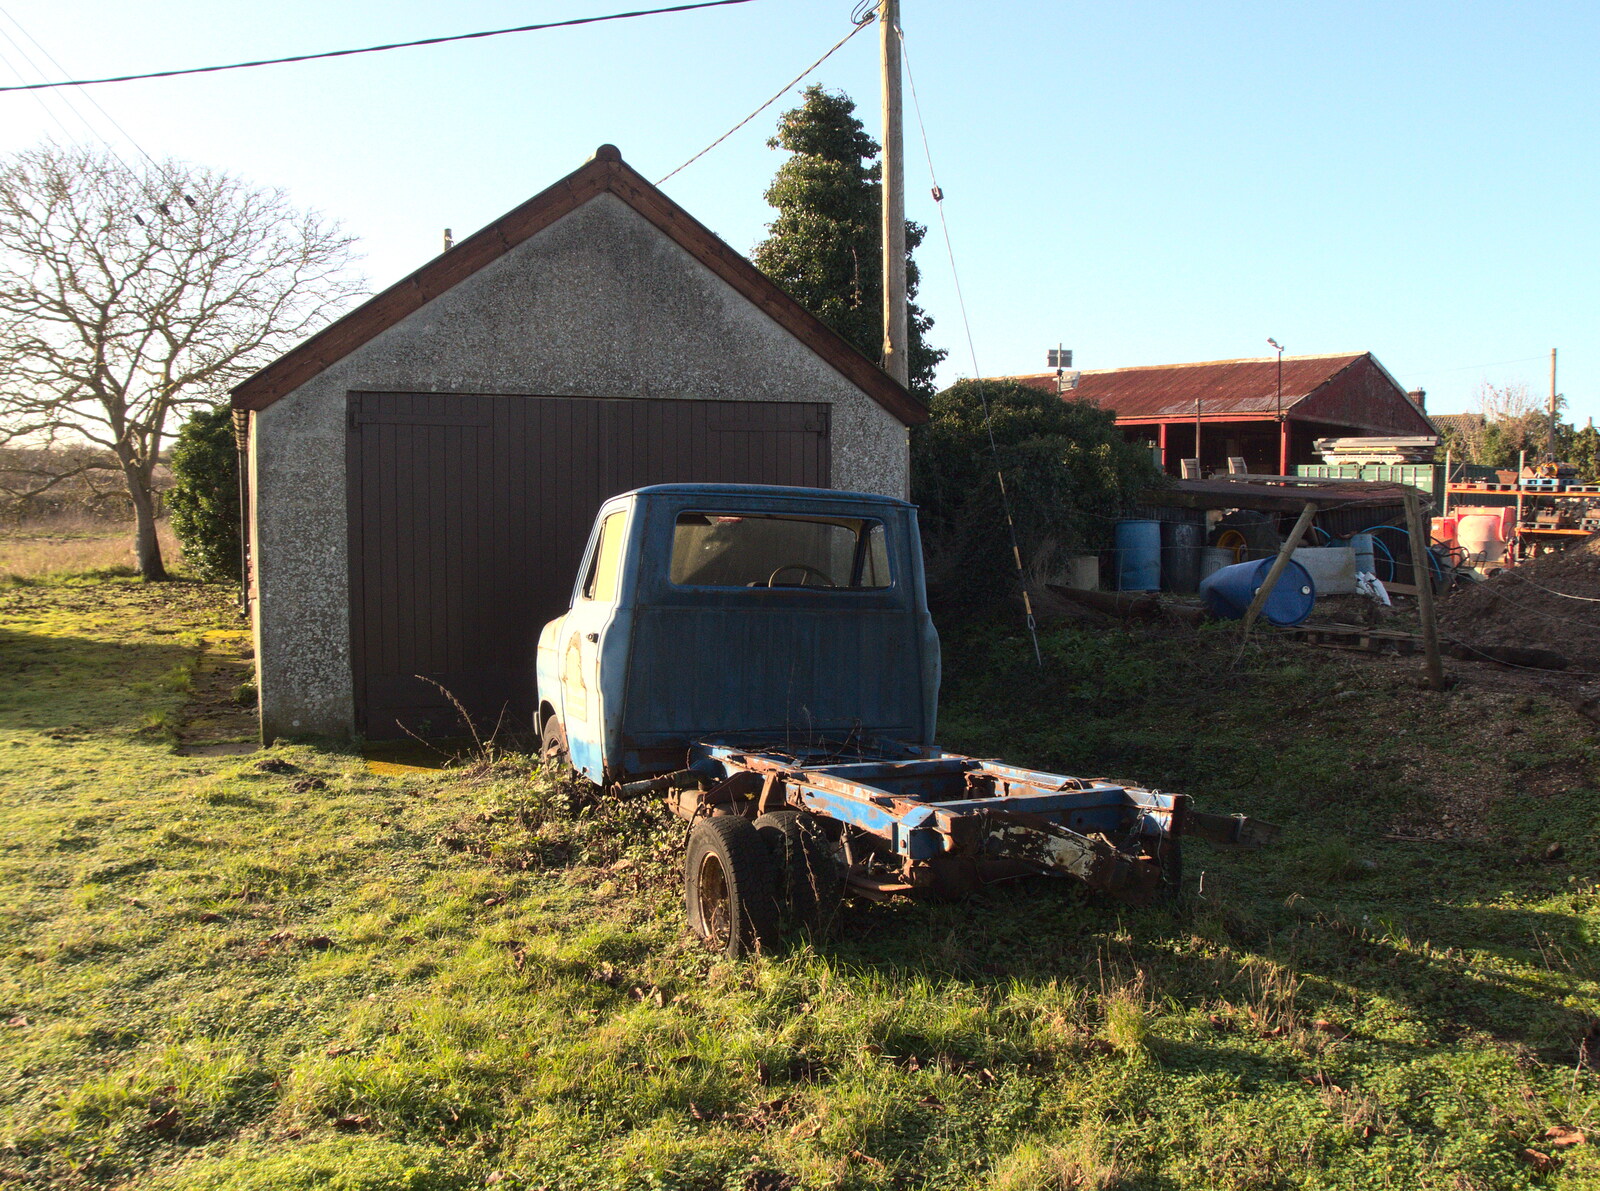 A Wander around Fair Green, Diss, Norfolk - 11th January 2023: A derelict van, minus its body, near Fair Green